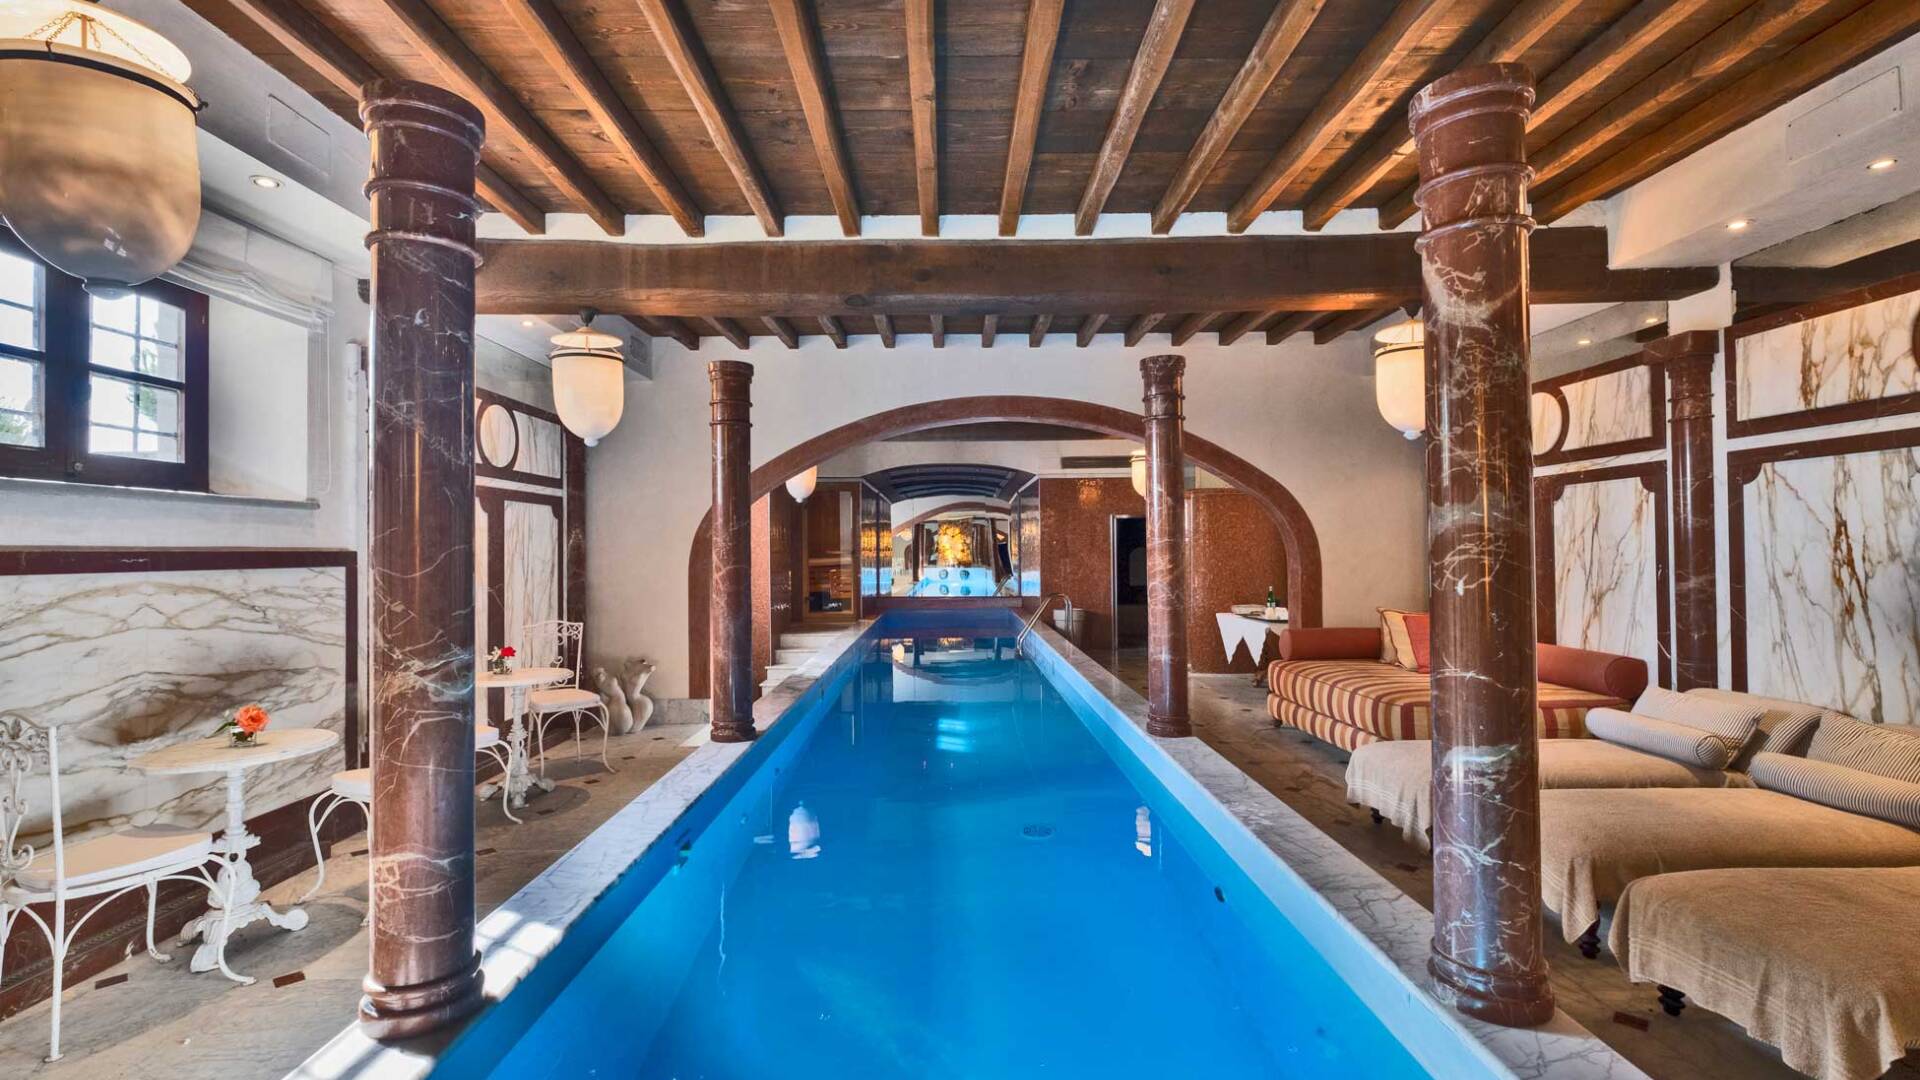 large indoor pool